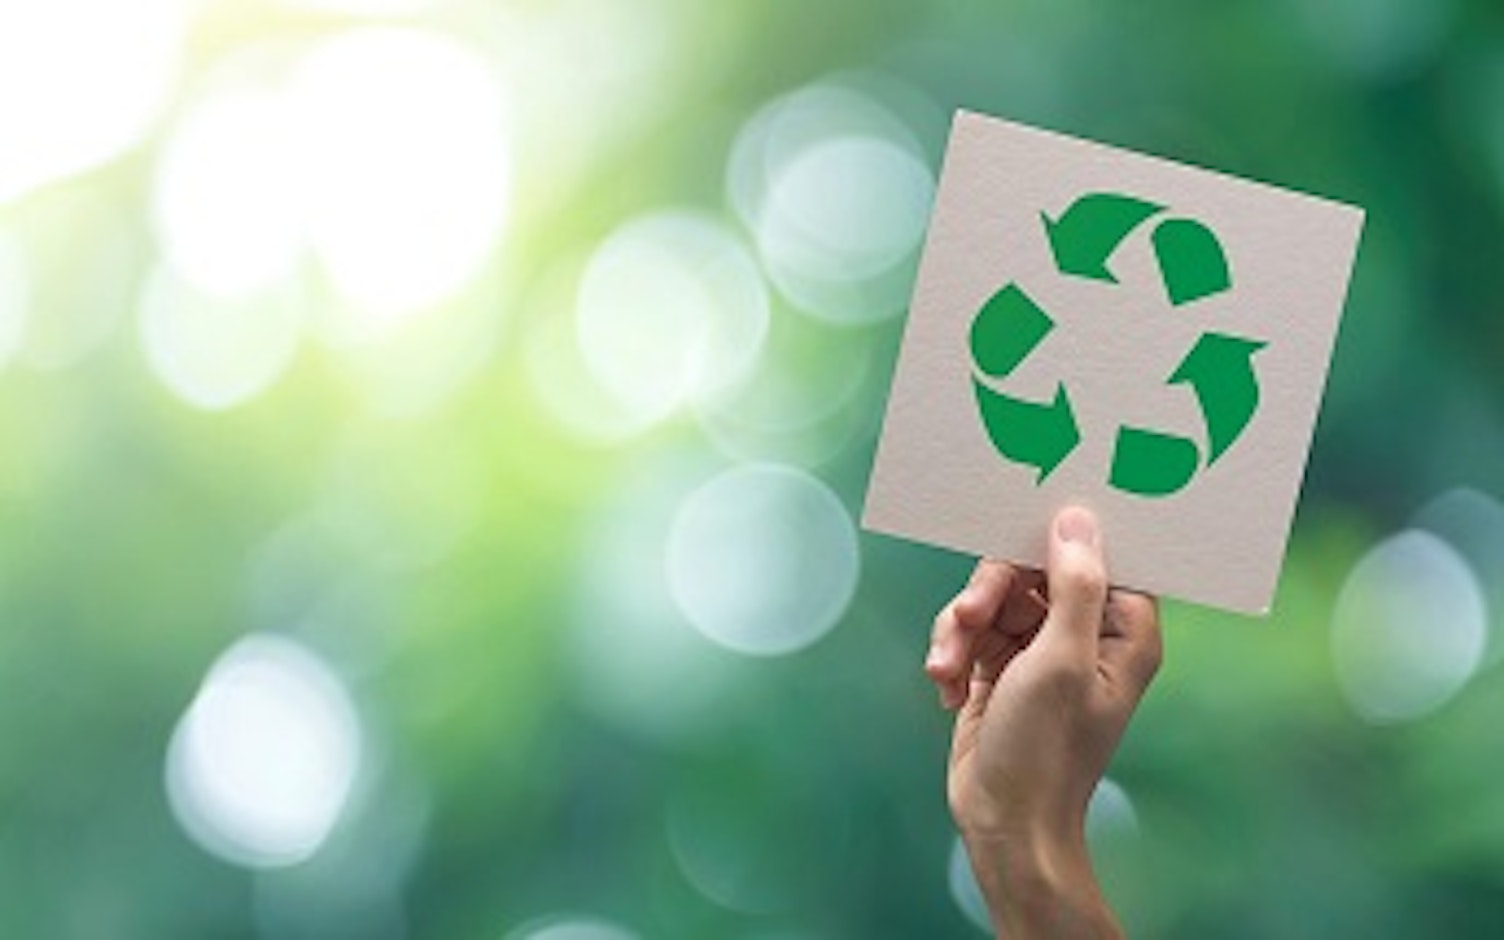 orig recycle logo on cardboard